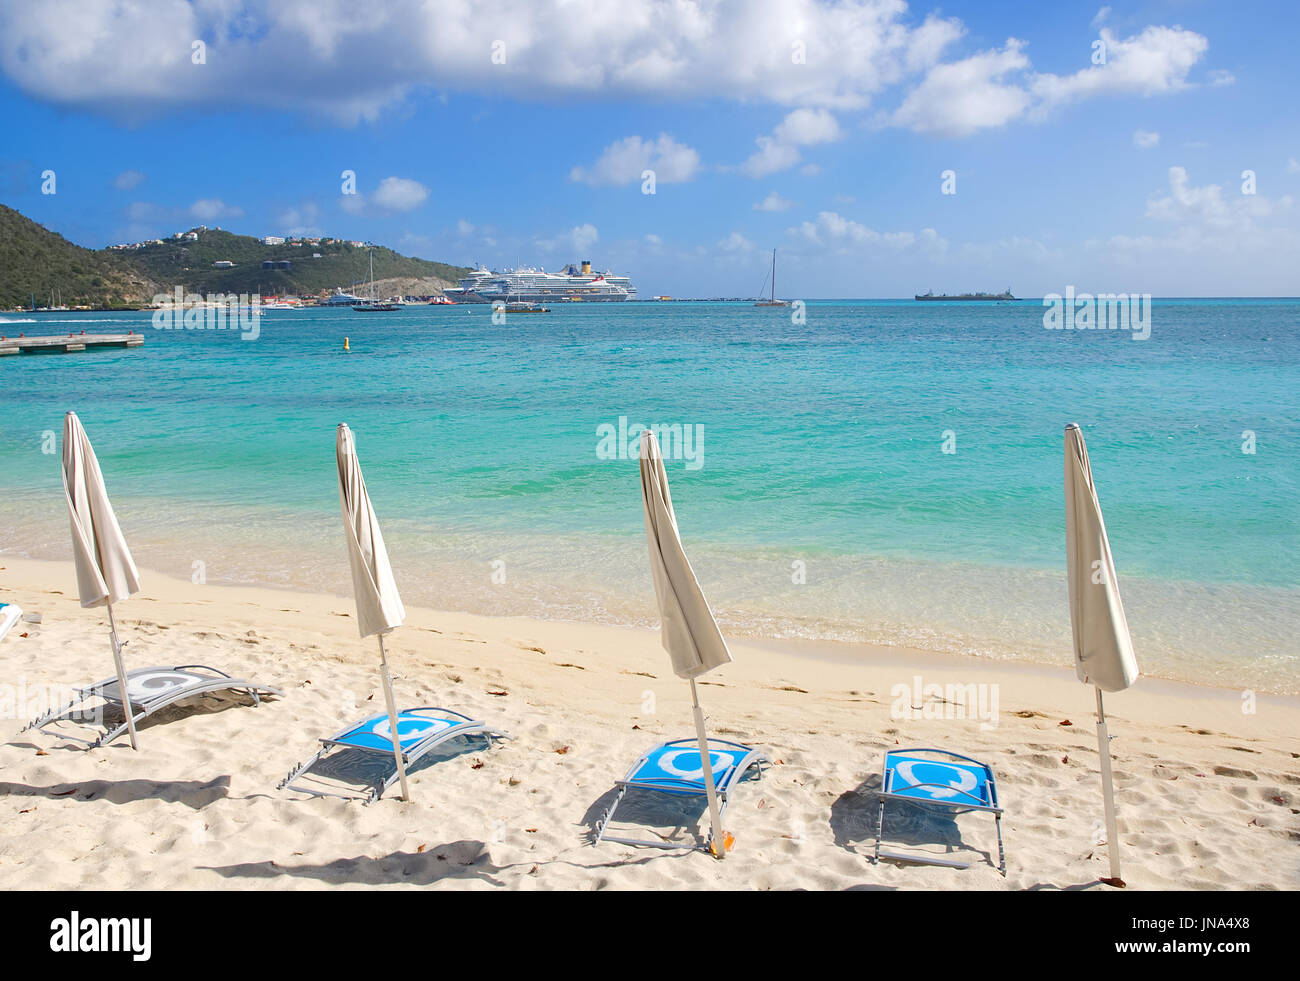 Simpson Bay e grande Bay - Philipsburg Sint Maarten ( San Martin ) - Caraibi isola tropicale Foto Stock